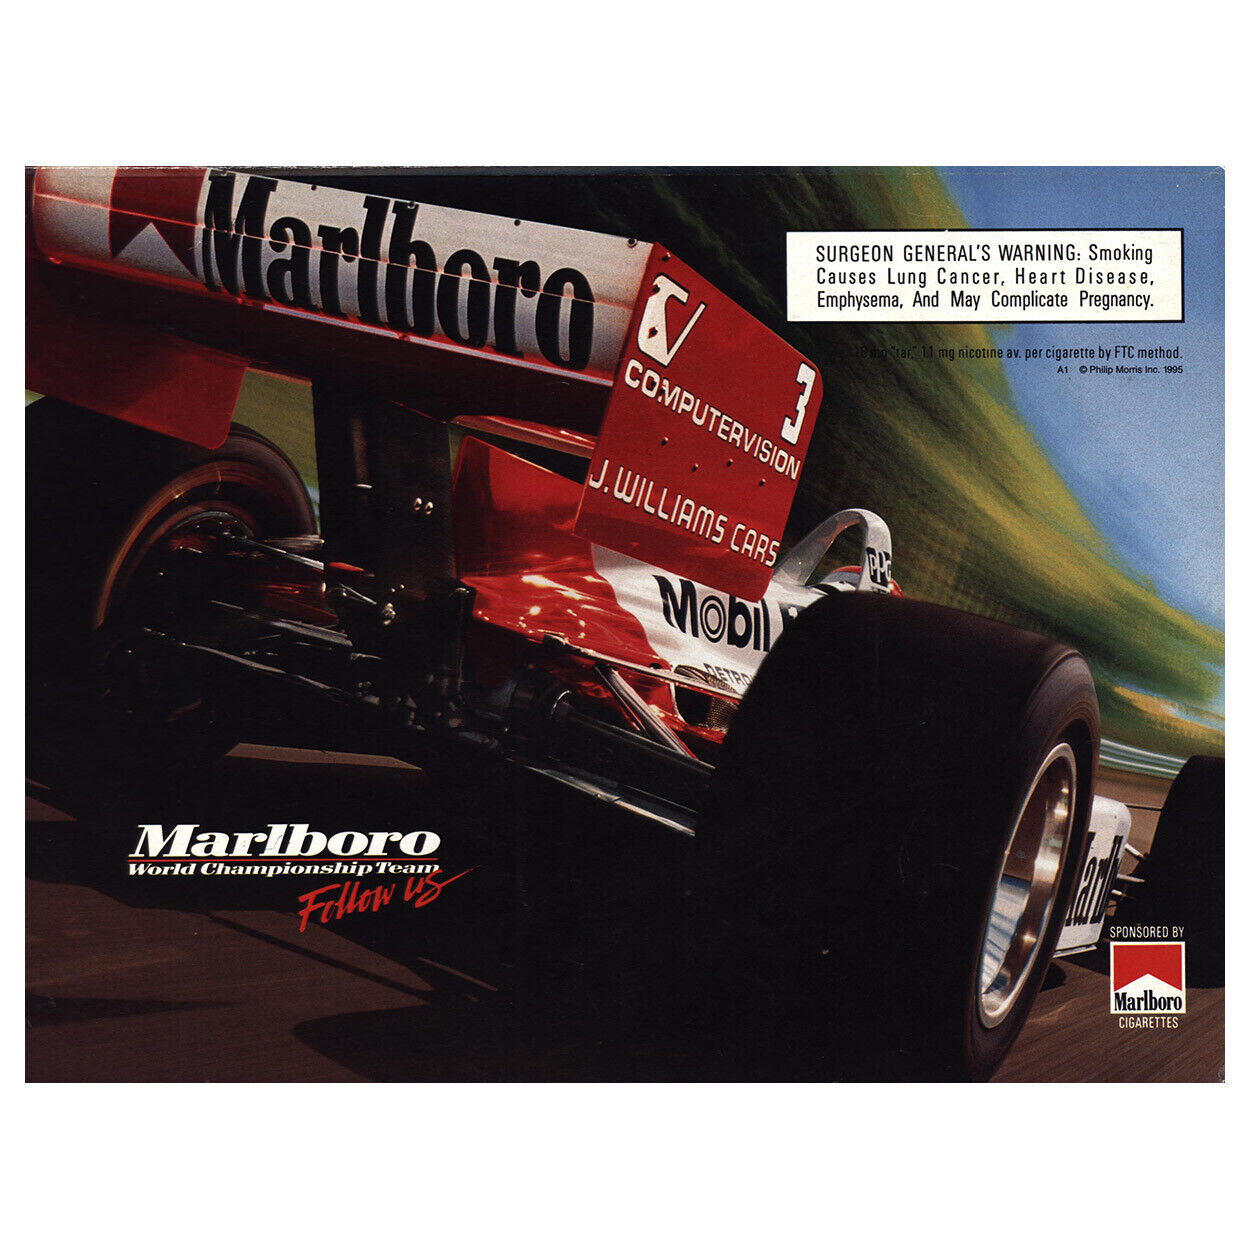 1995 Marlboro: Championship Team Computervision Vintage Print Ad